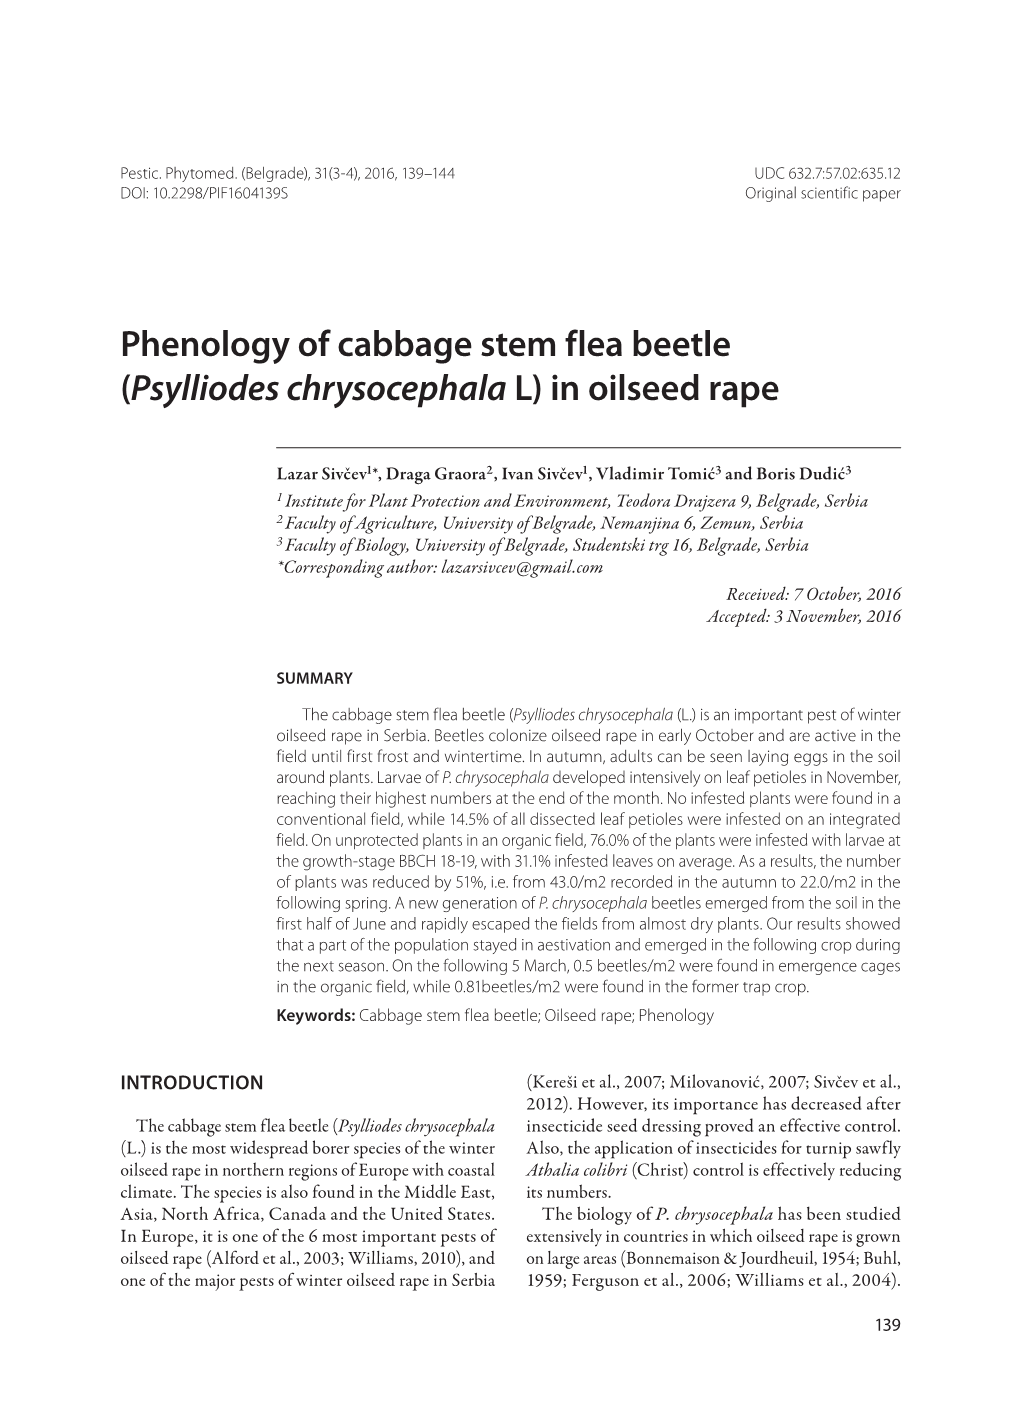 Phenology of Cabbage Stem Flea Beetle (Psylliodes Chrysocephala L) in Oilseed Rape